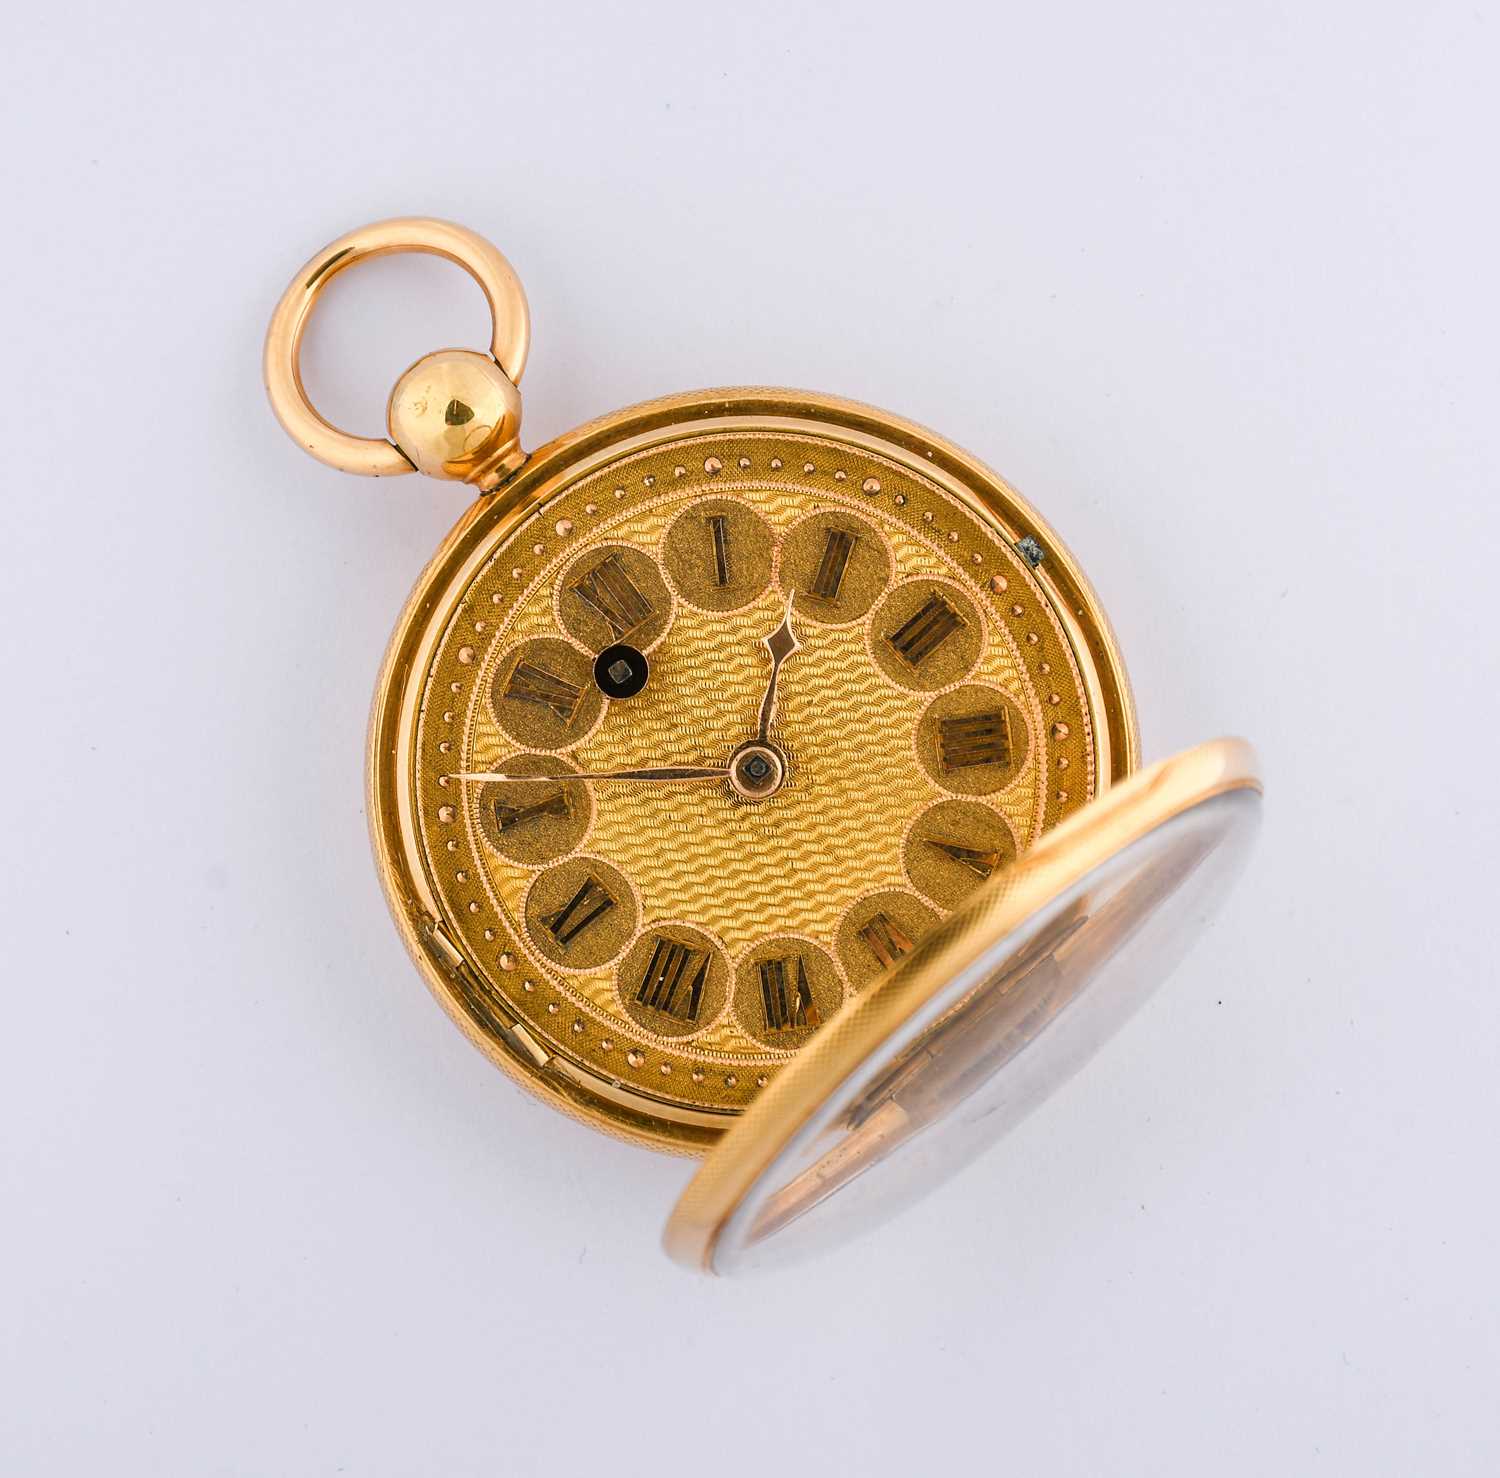 Litherland Davis & Co: An 18 Carat Gold Open Faced Pocket Watch, signed Litherland Davis & Co, - Image 2 of 2